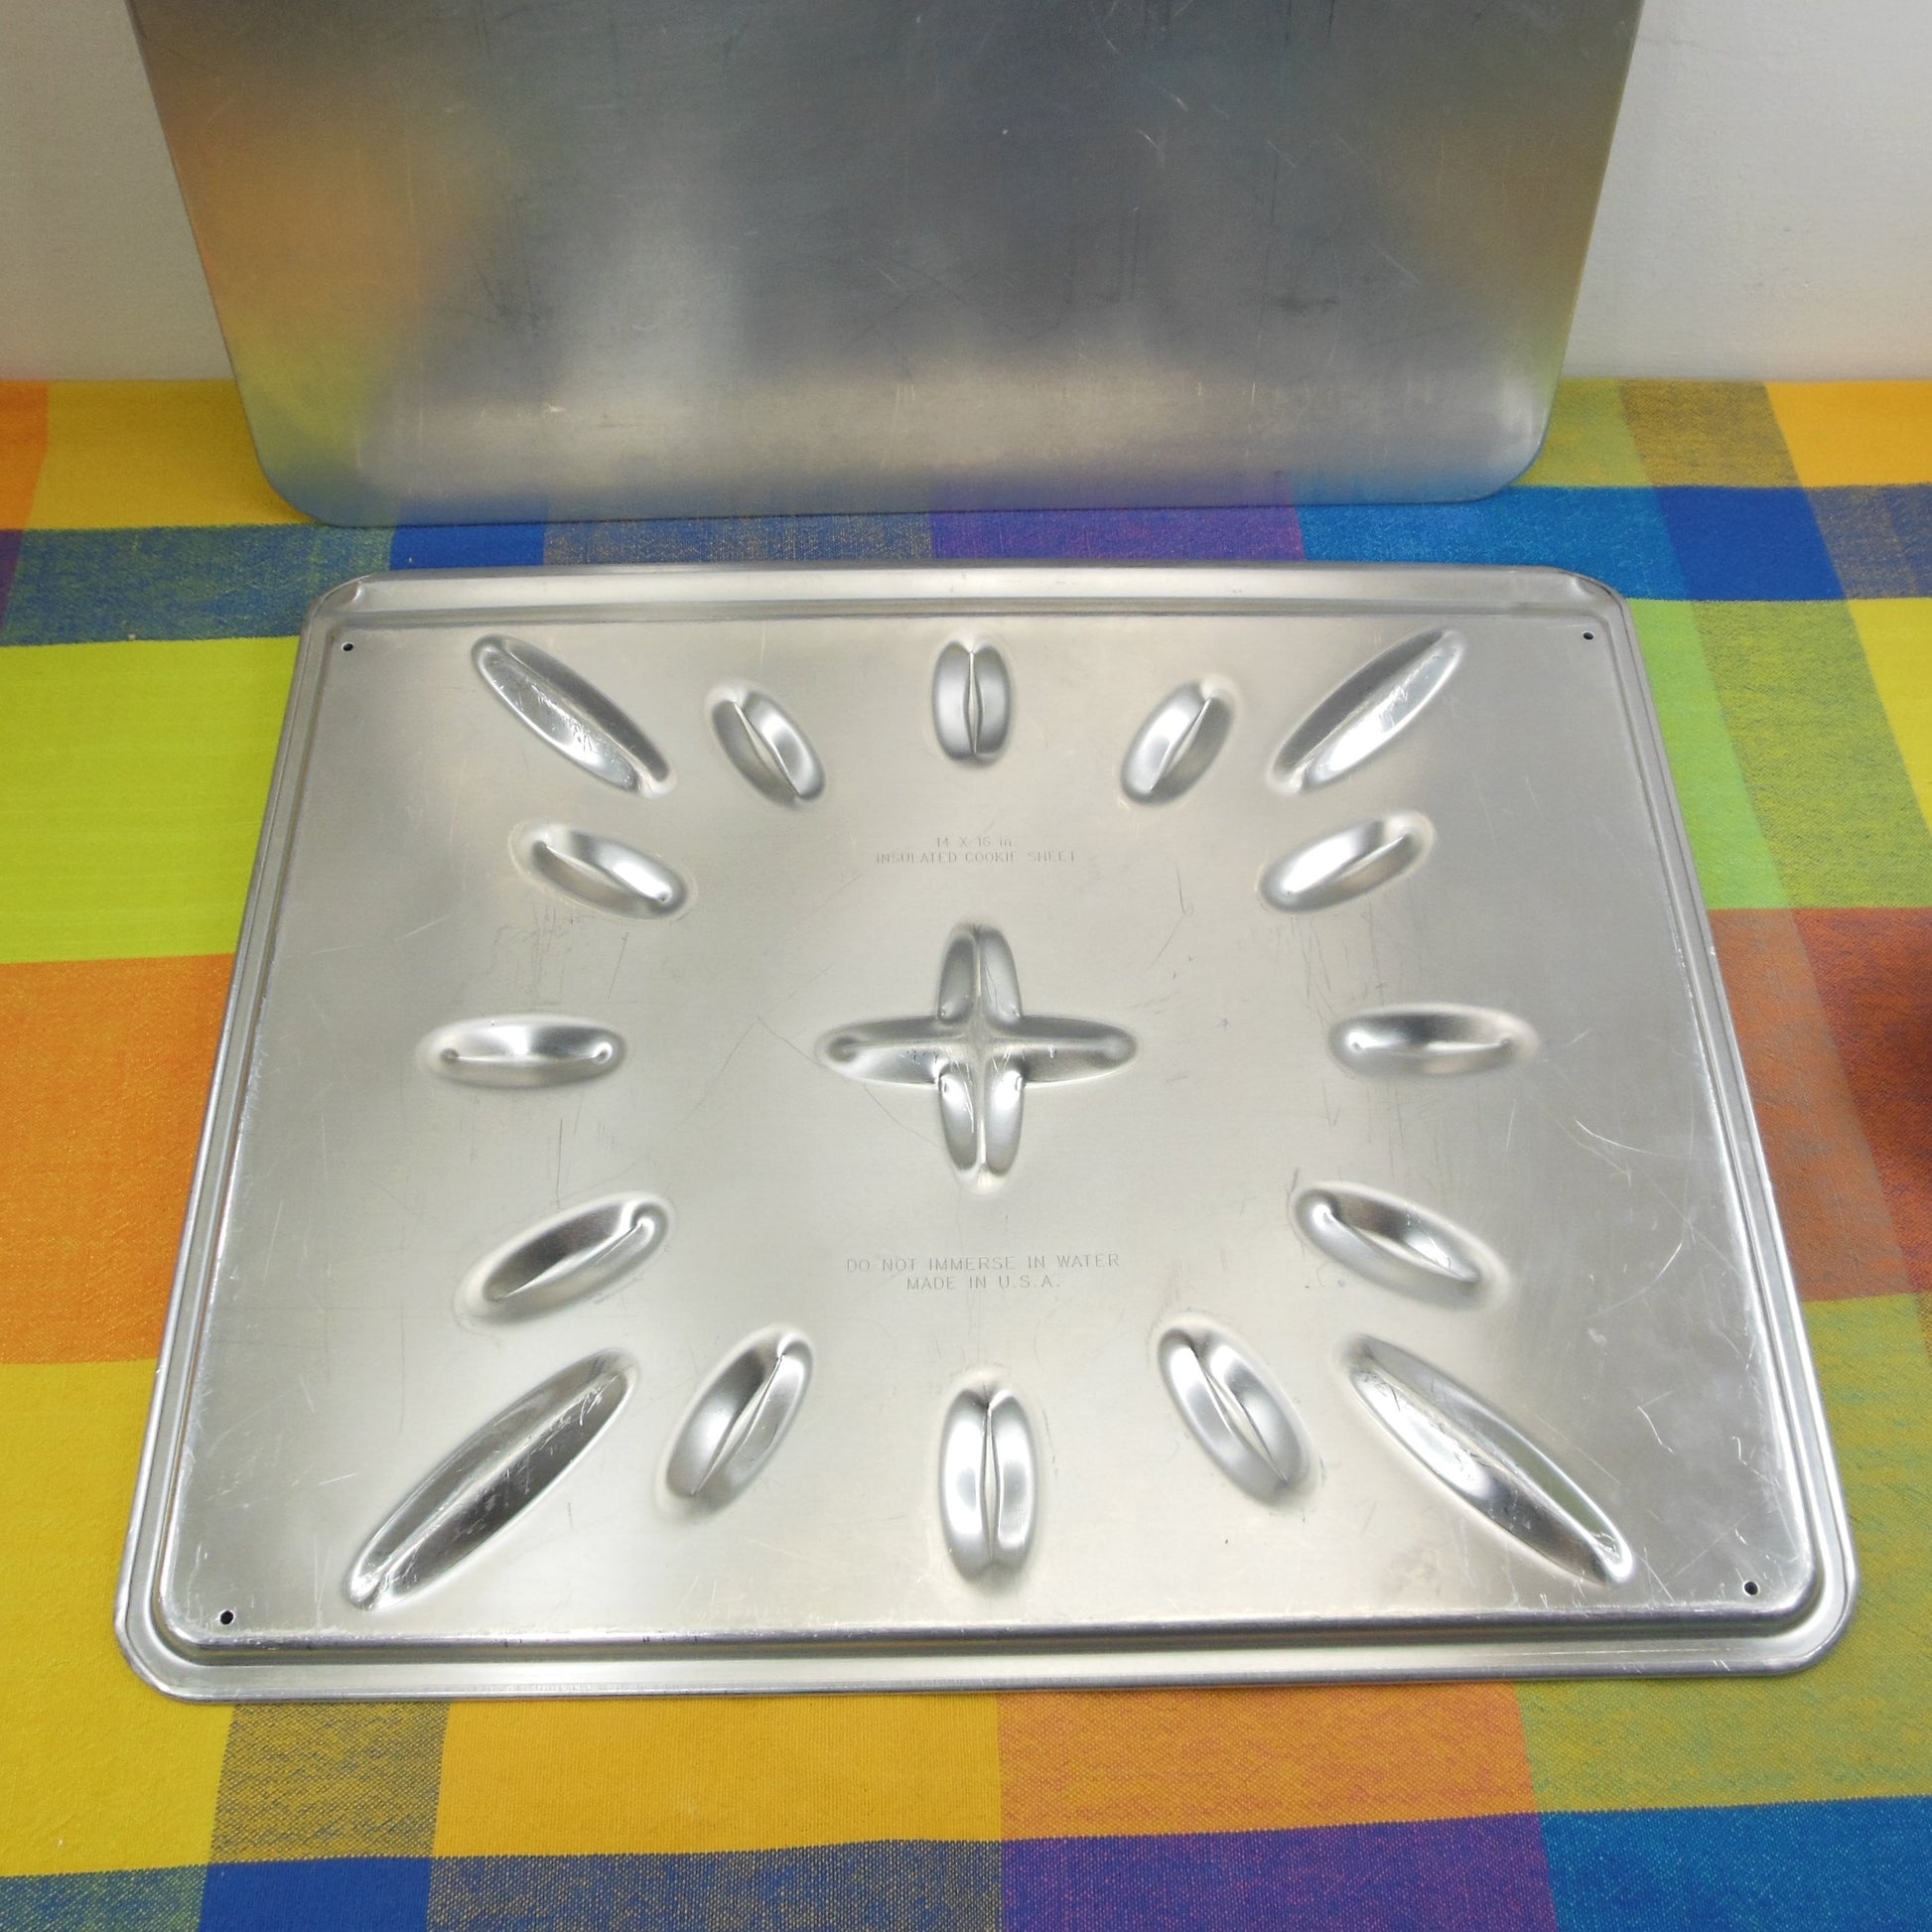 Nordic Ware Aluminum Insulated Baking Sheet, 16x 14